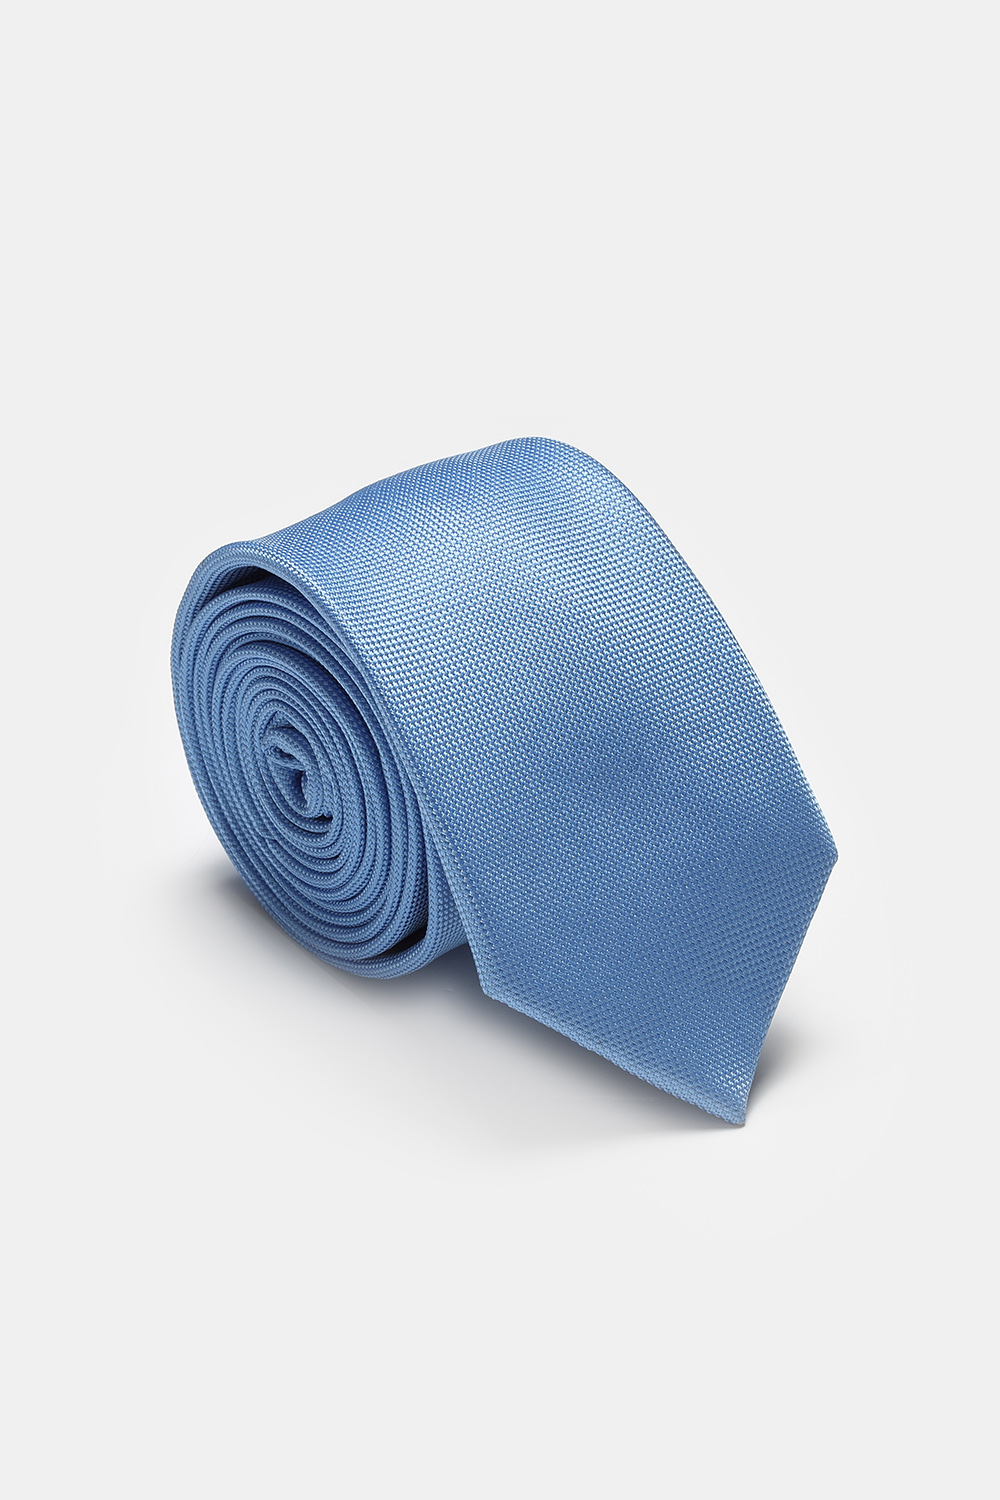 Jacquard Tie 6 cm Light Blue - TIE HOUSE